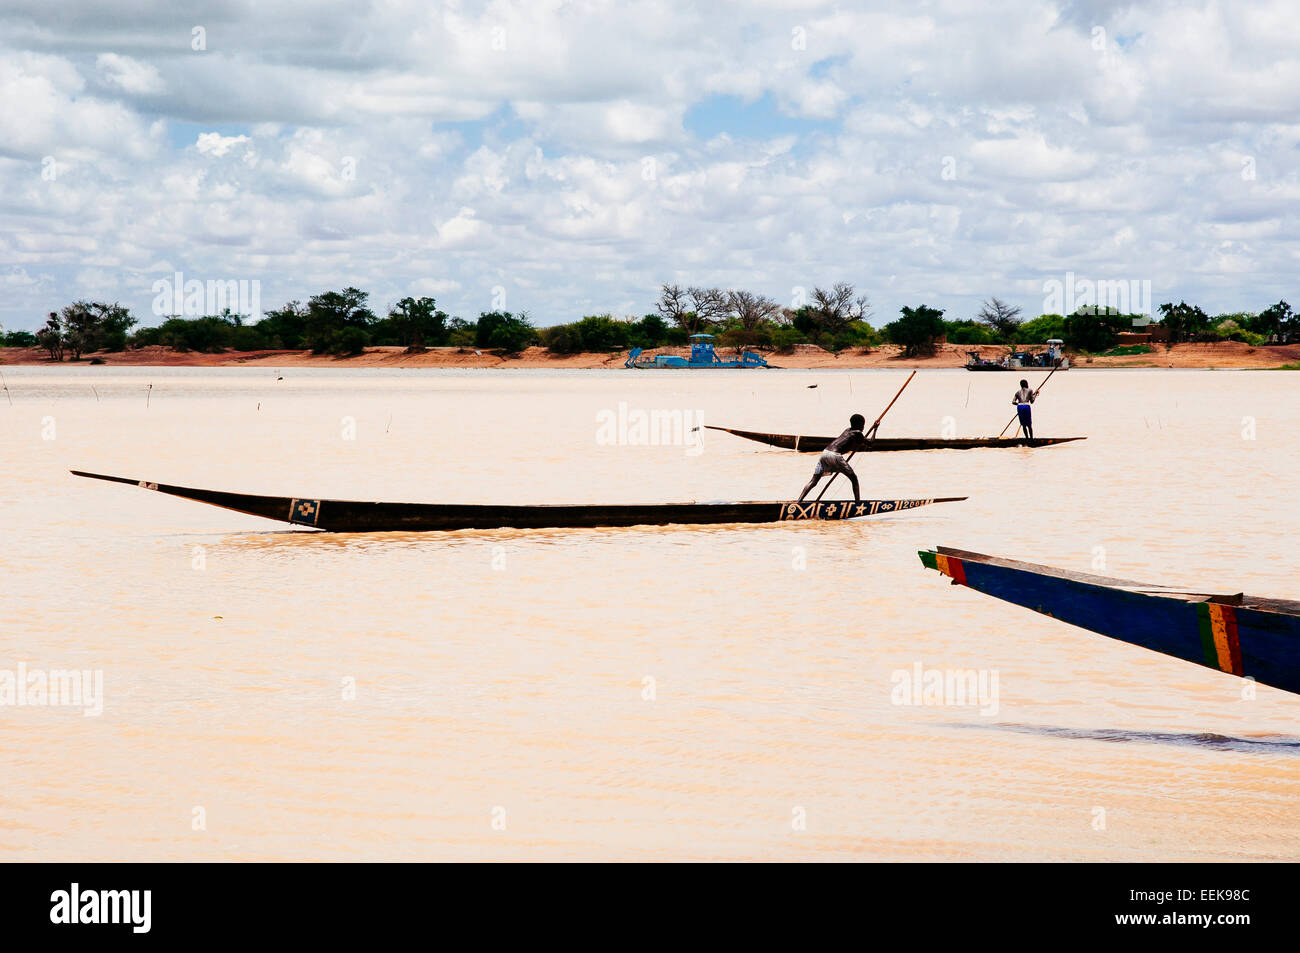 Men fishing from canoe on the Bani river, Djenne, Mali. Stock Photo